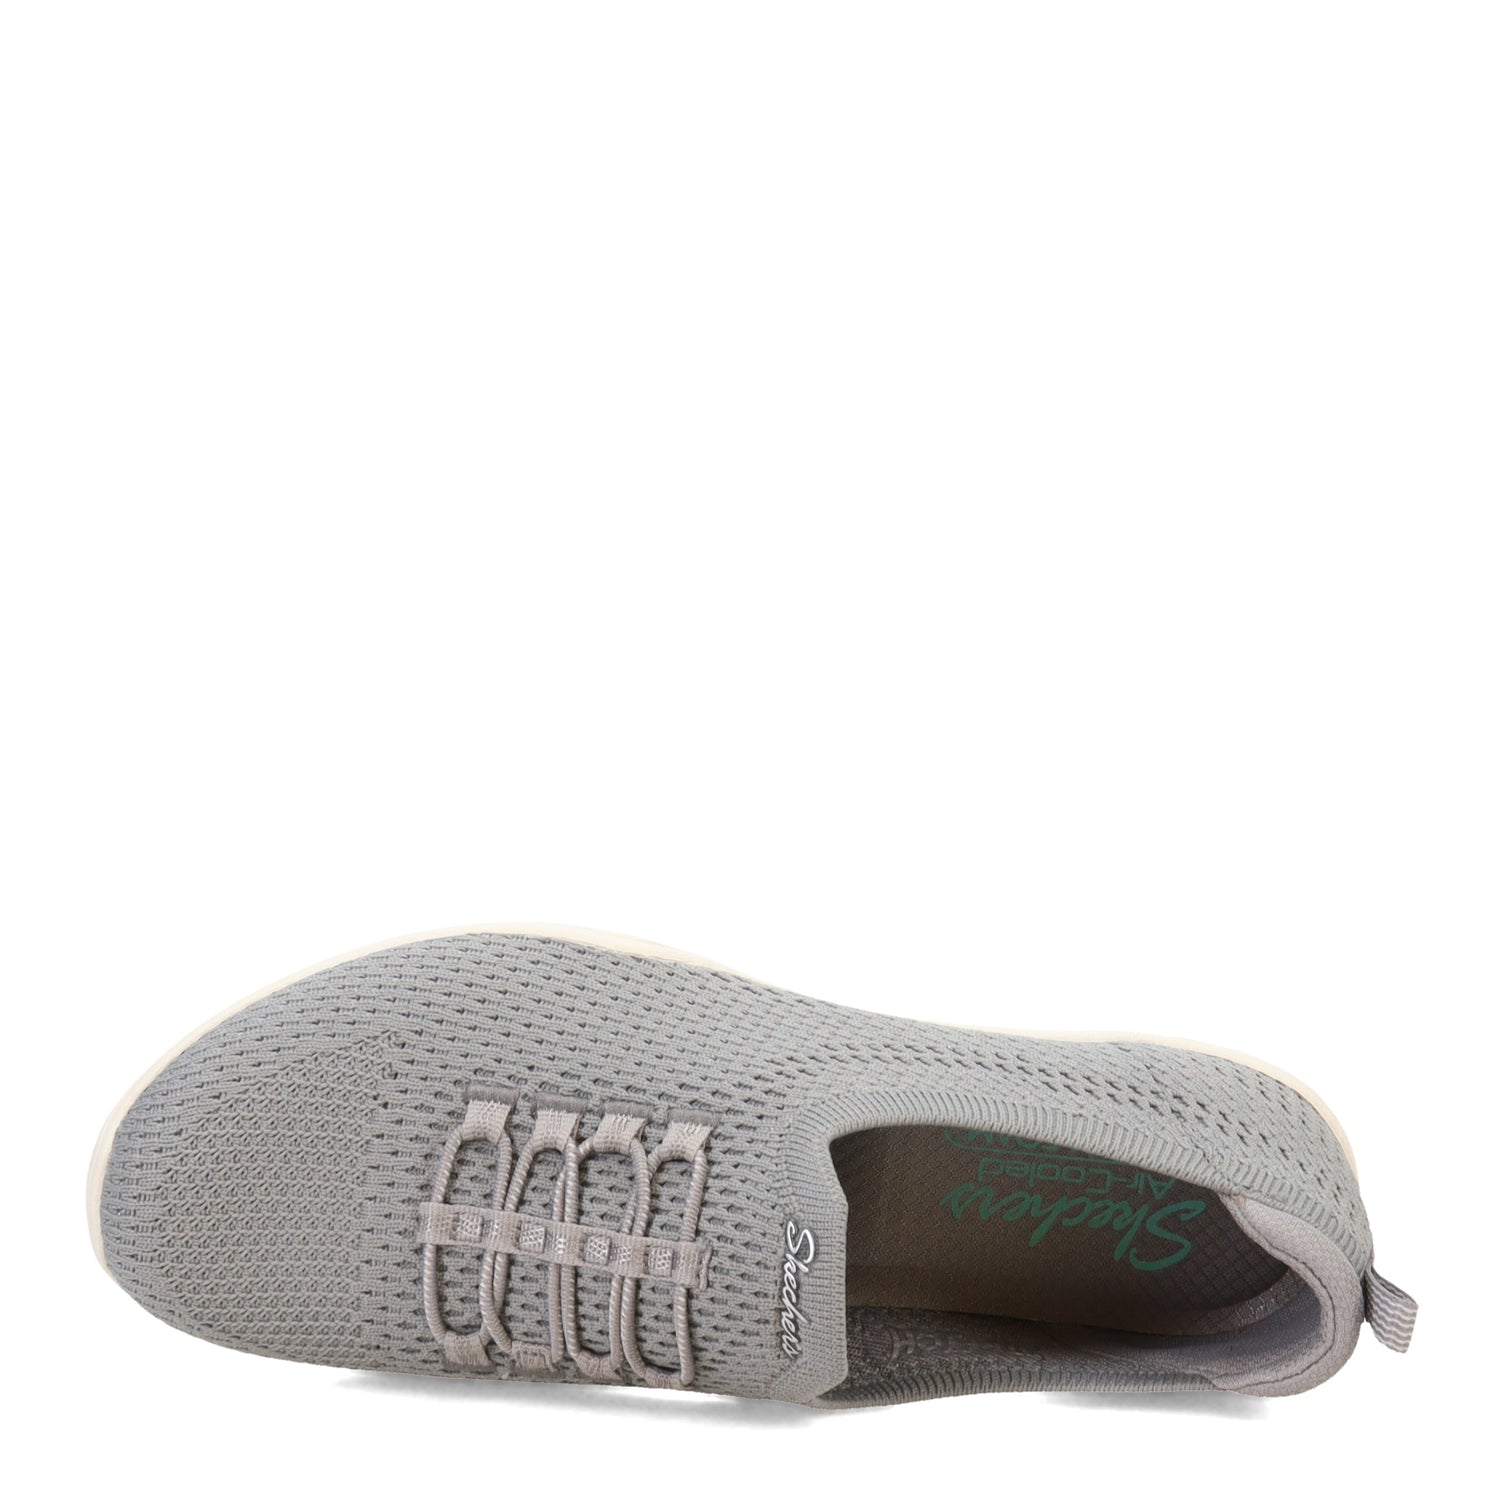 Peltz Shoes  Women's Skechers Active Newbury St Starlight Stroll Sneaker Grey 100431-GRY